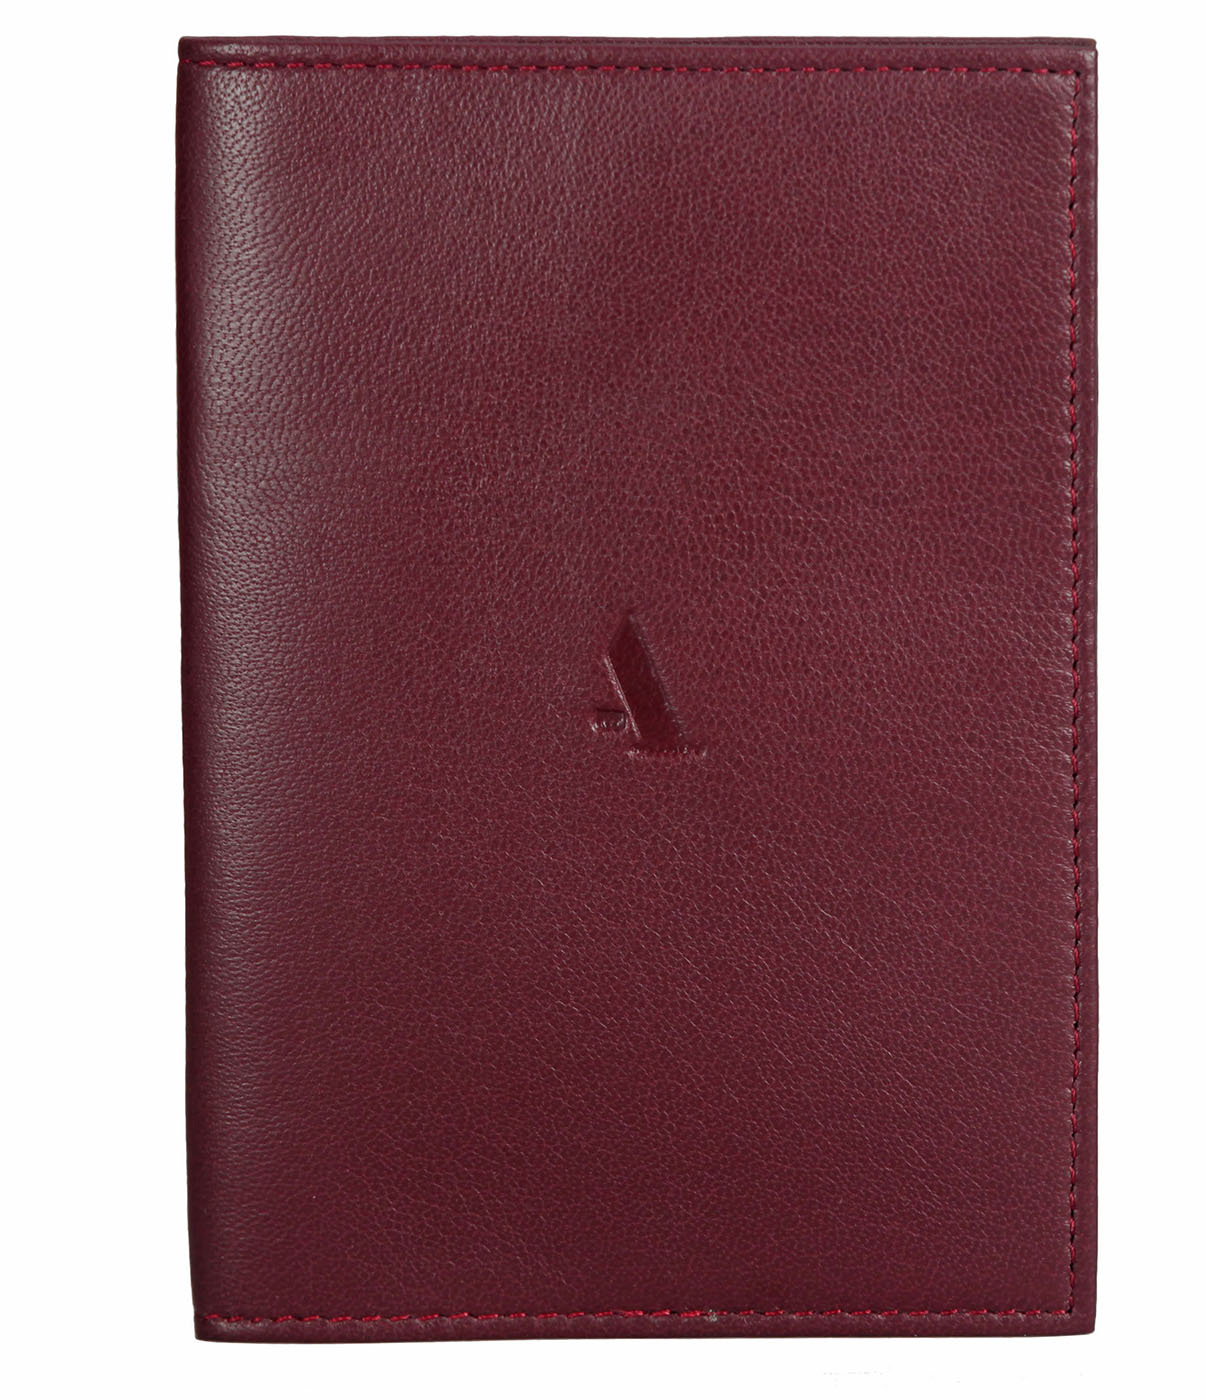 W73--Passport cover in Genuine Leather - Wine